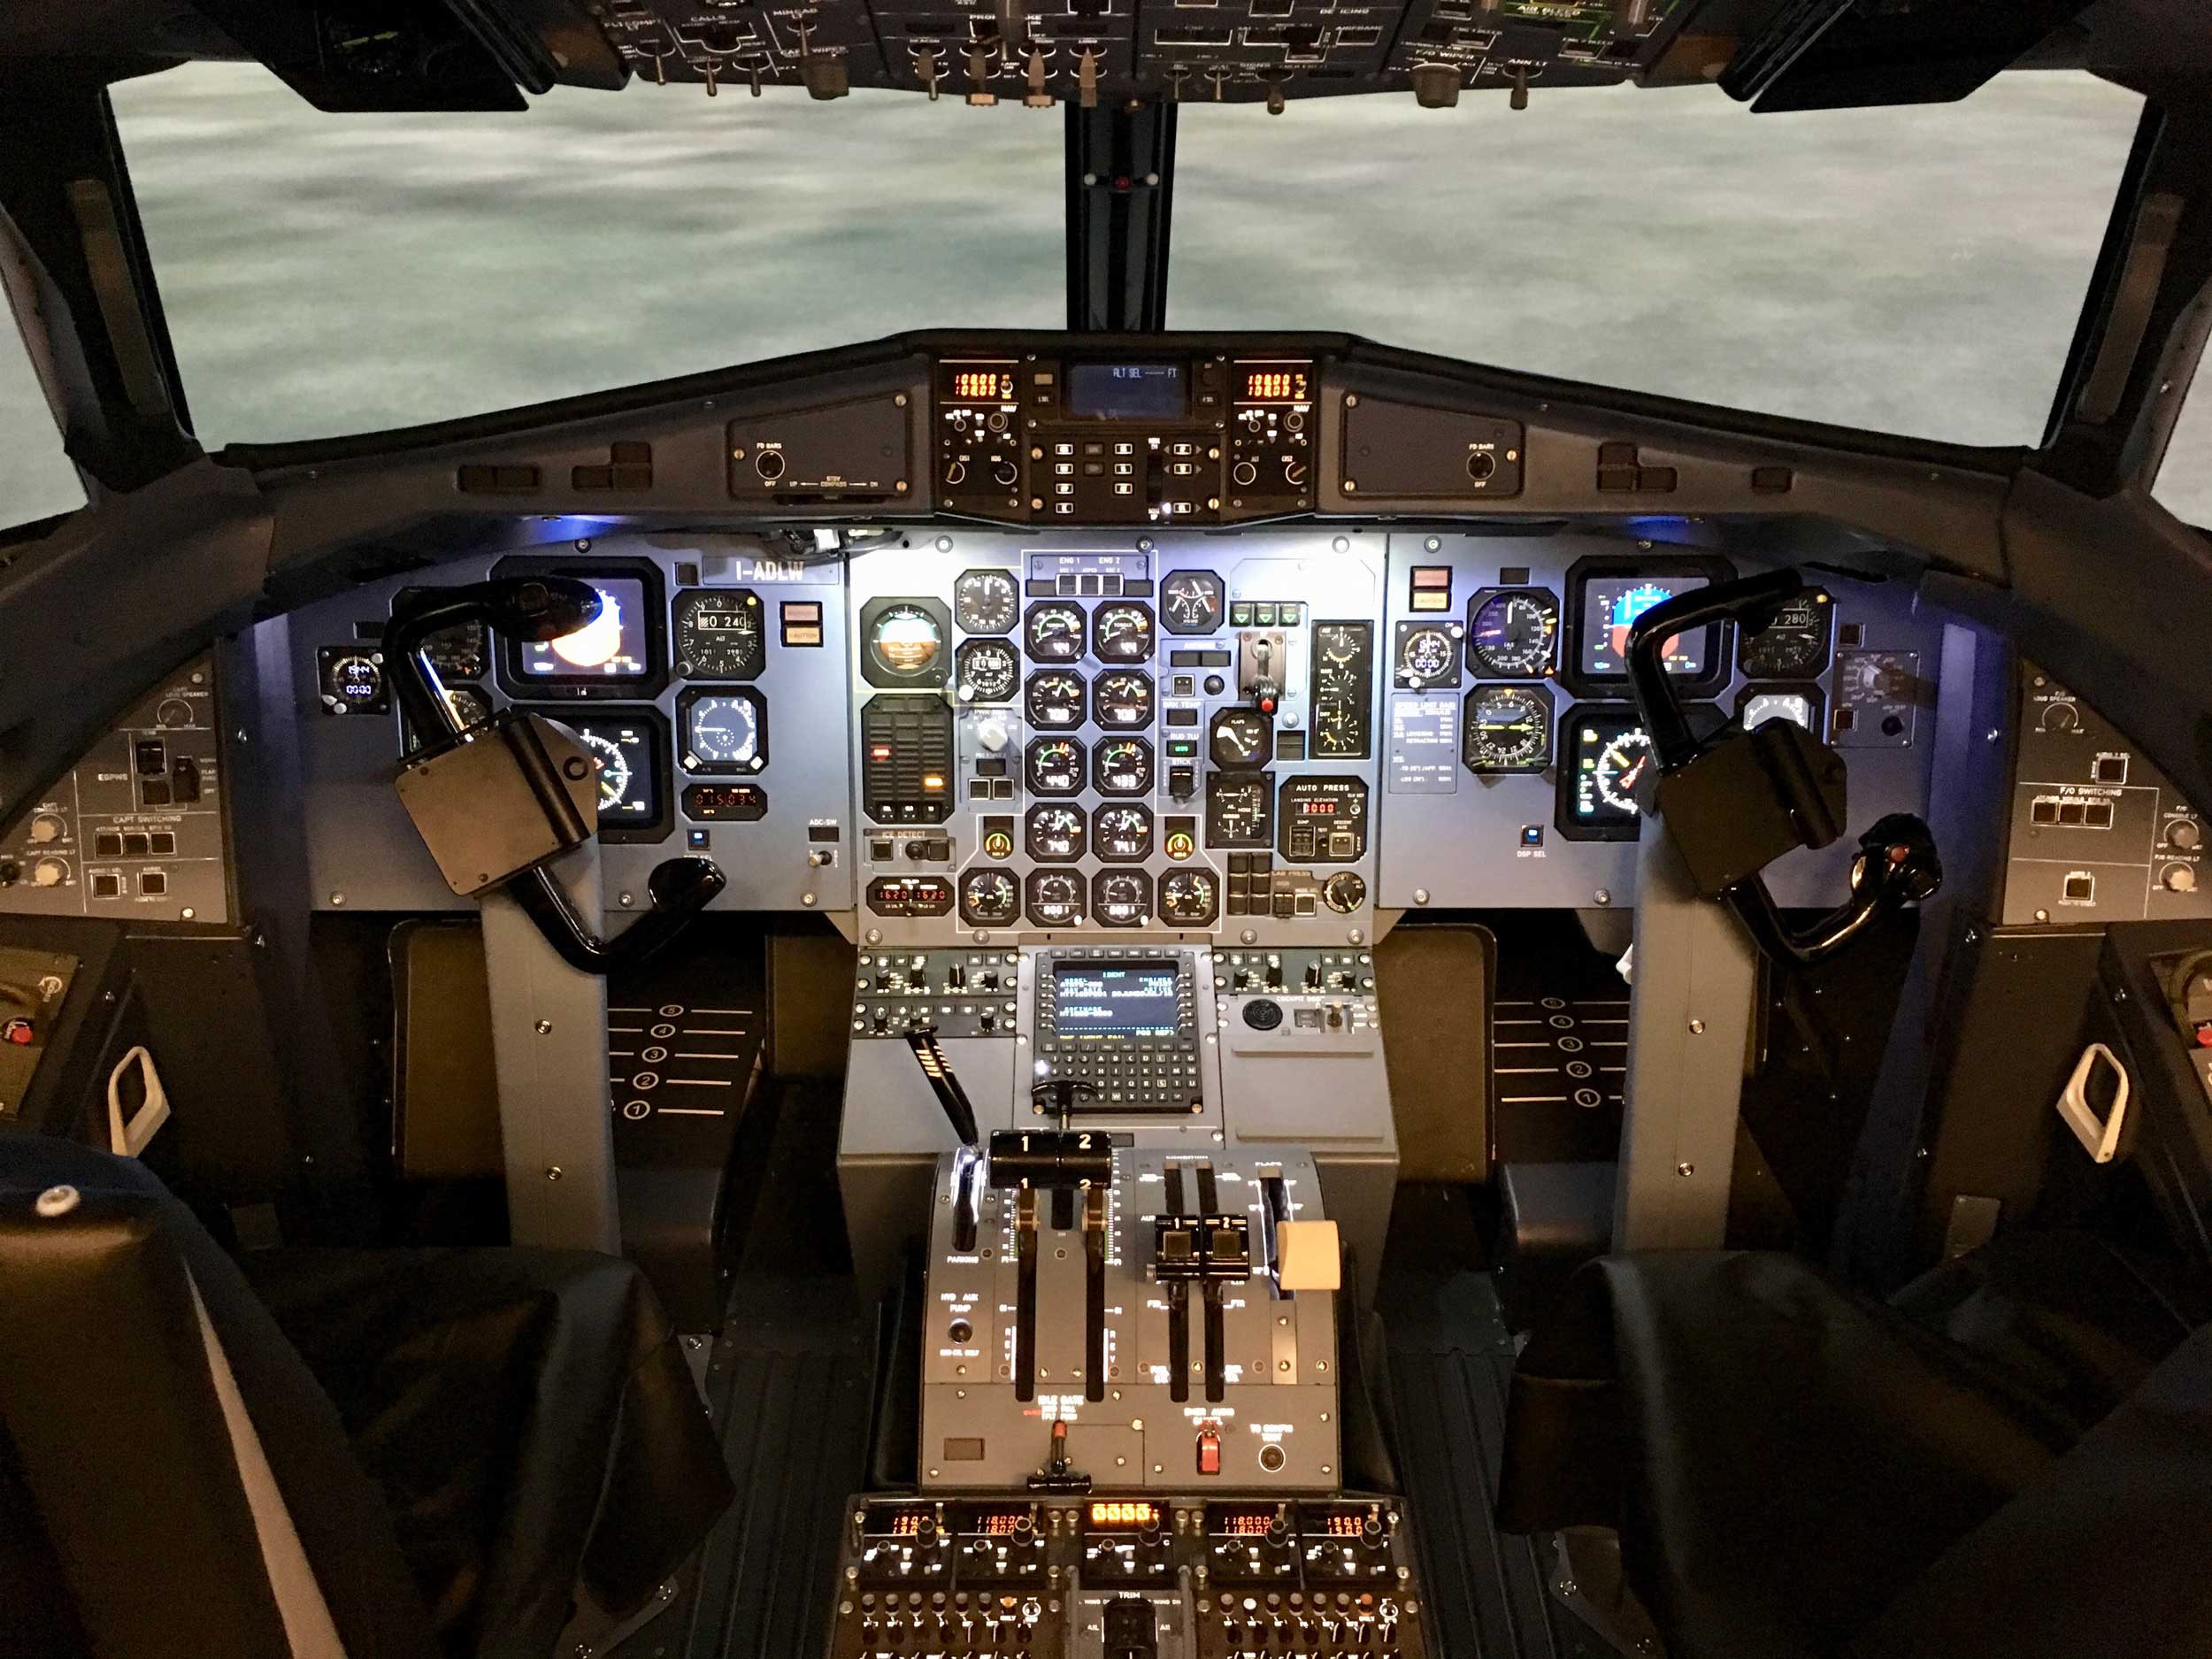 Axis ATR-72 simulator